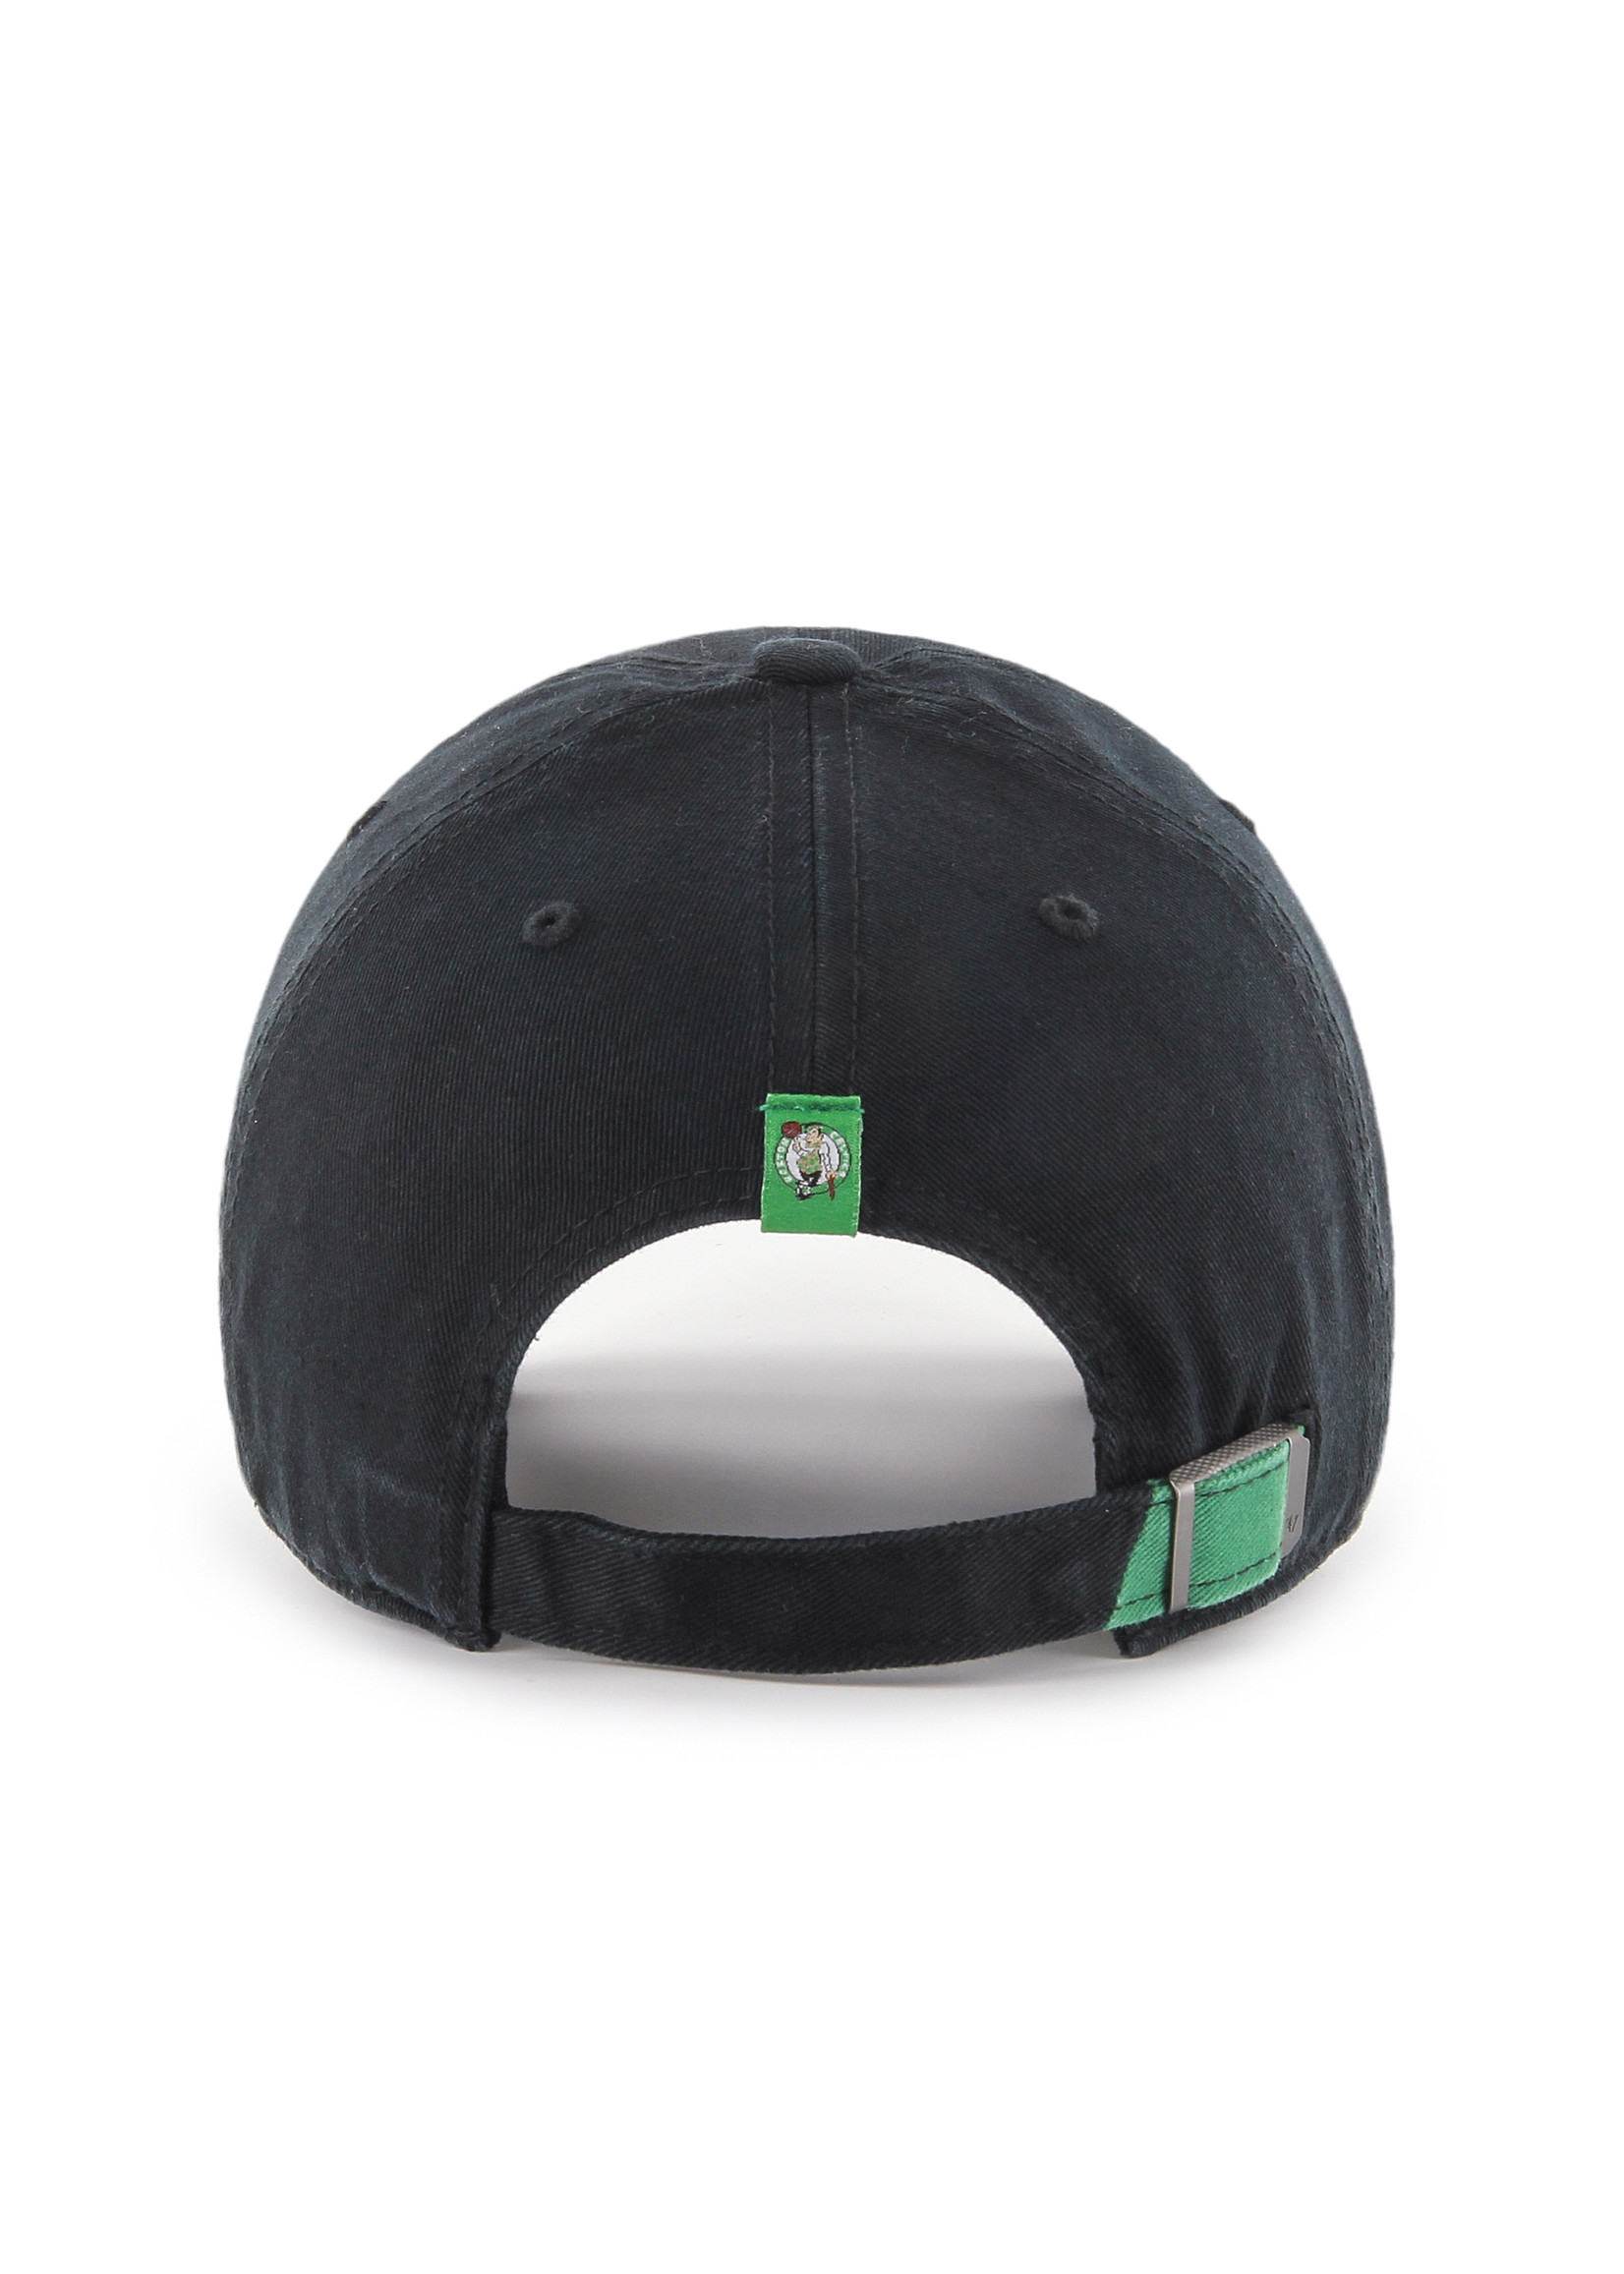 '47 Brand Celtics Black Hat - Split Shot